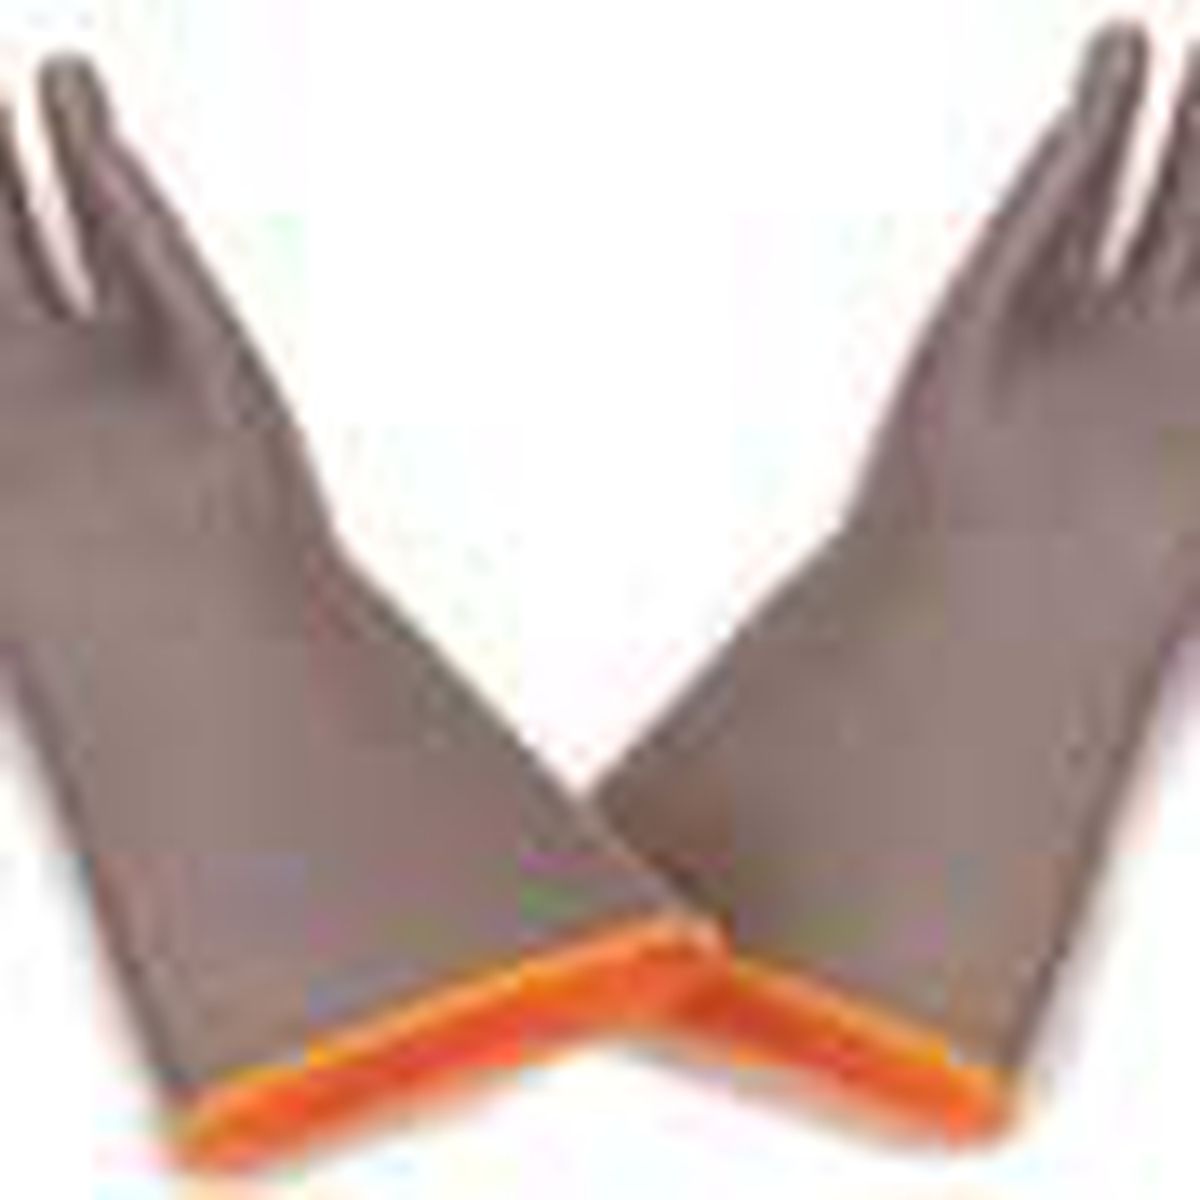 rubber gloves